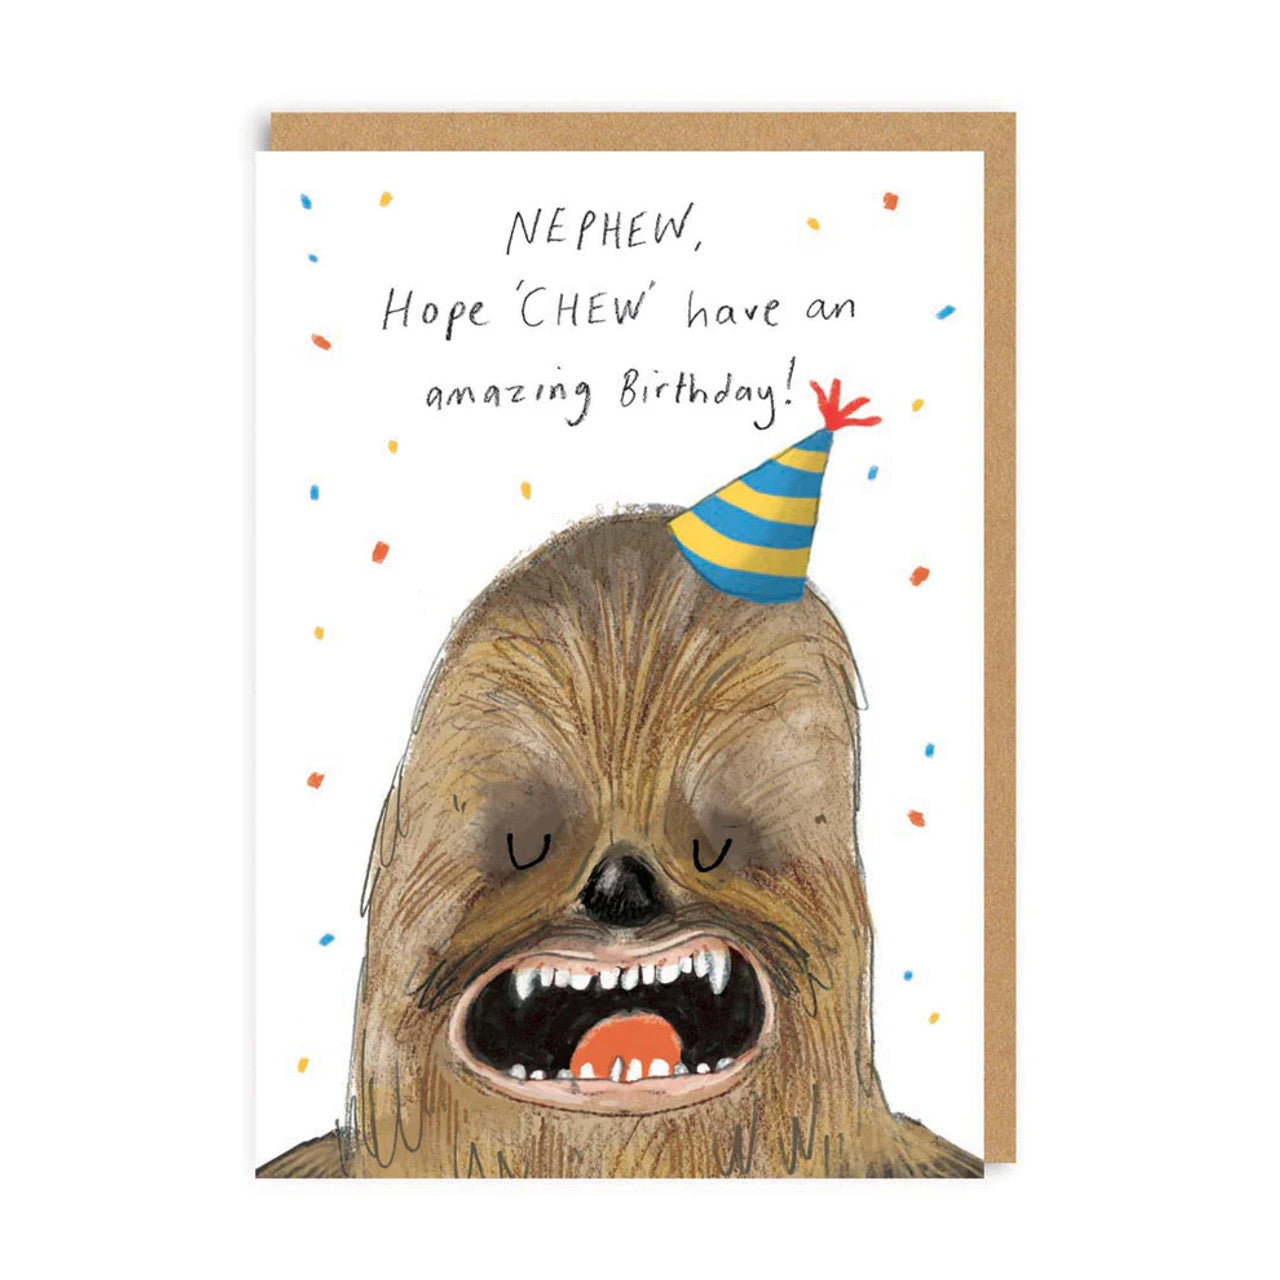 Nephew Birthday Card text reads "Nephew Hope 'Chew' have an amazing birthday!"